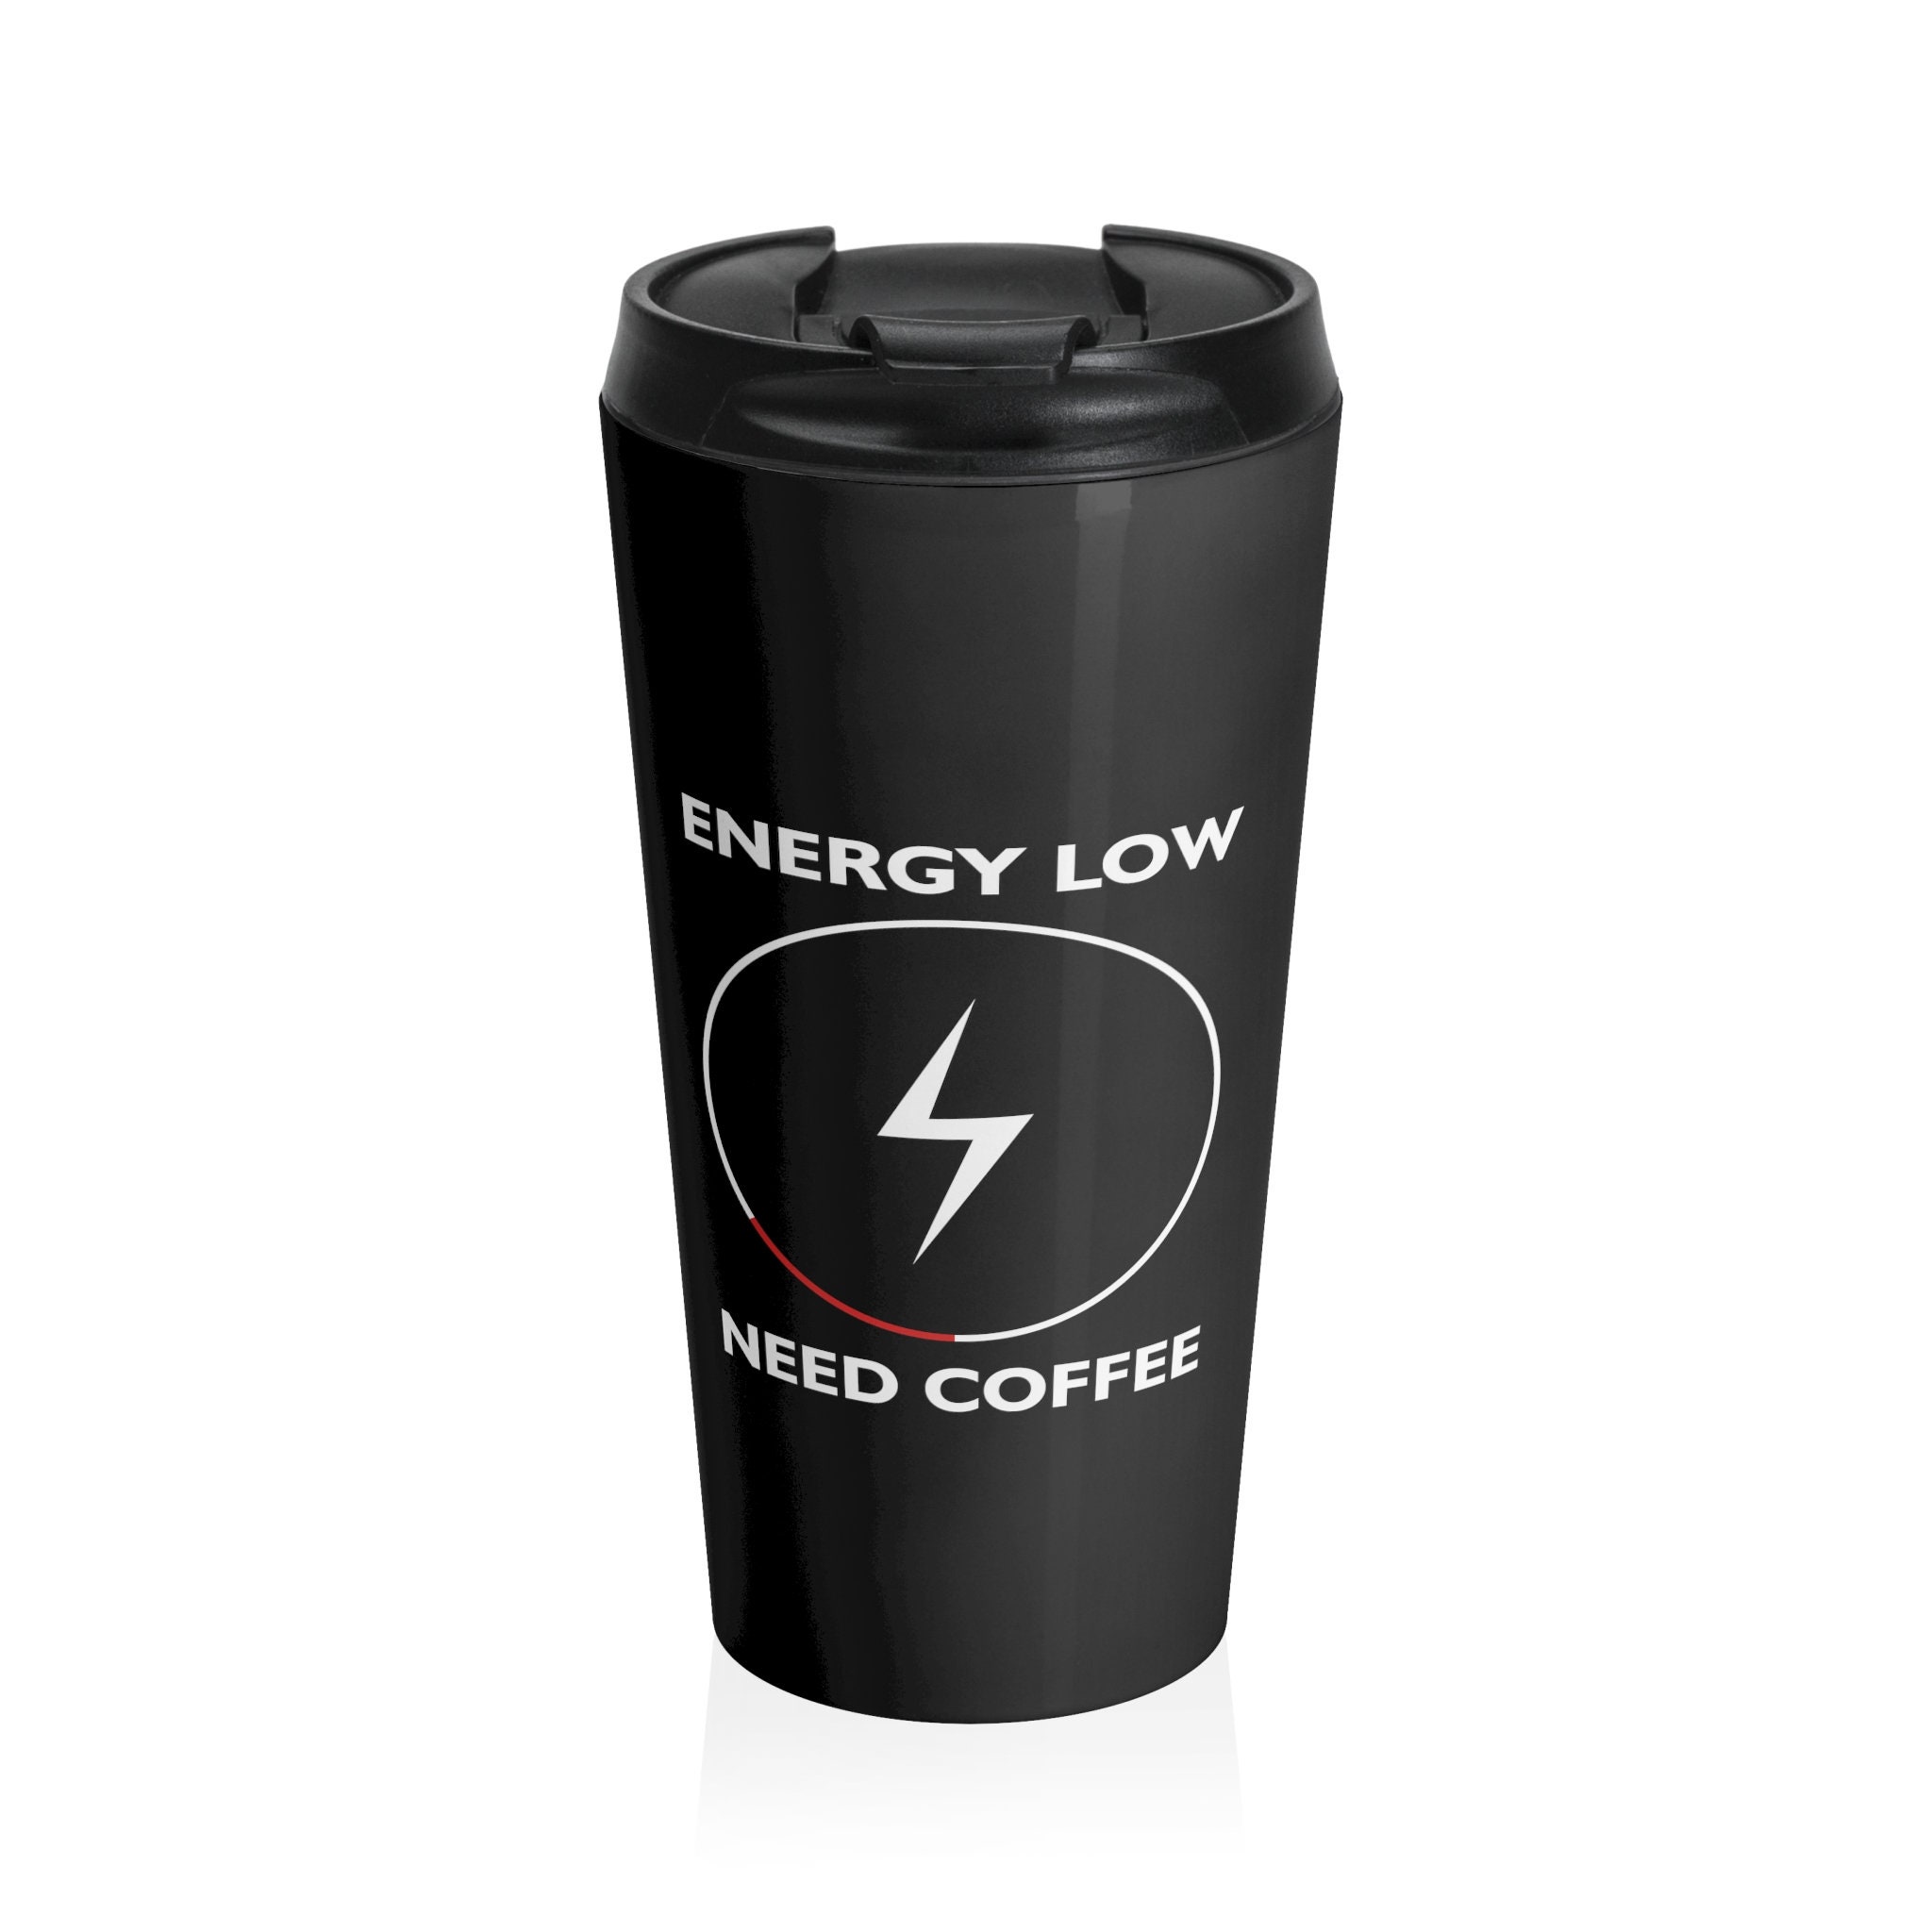 Energy Low Need Coffee Travel Mug, Keep Your Coffee Hot, Office Mug,  Airline Mug, Earth Friendly, Gift for Her, Gift for Him, Funny Mug 